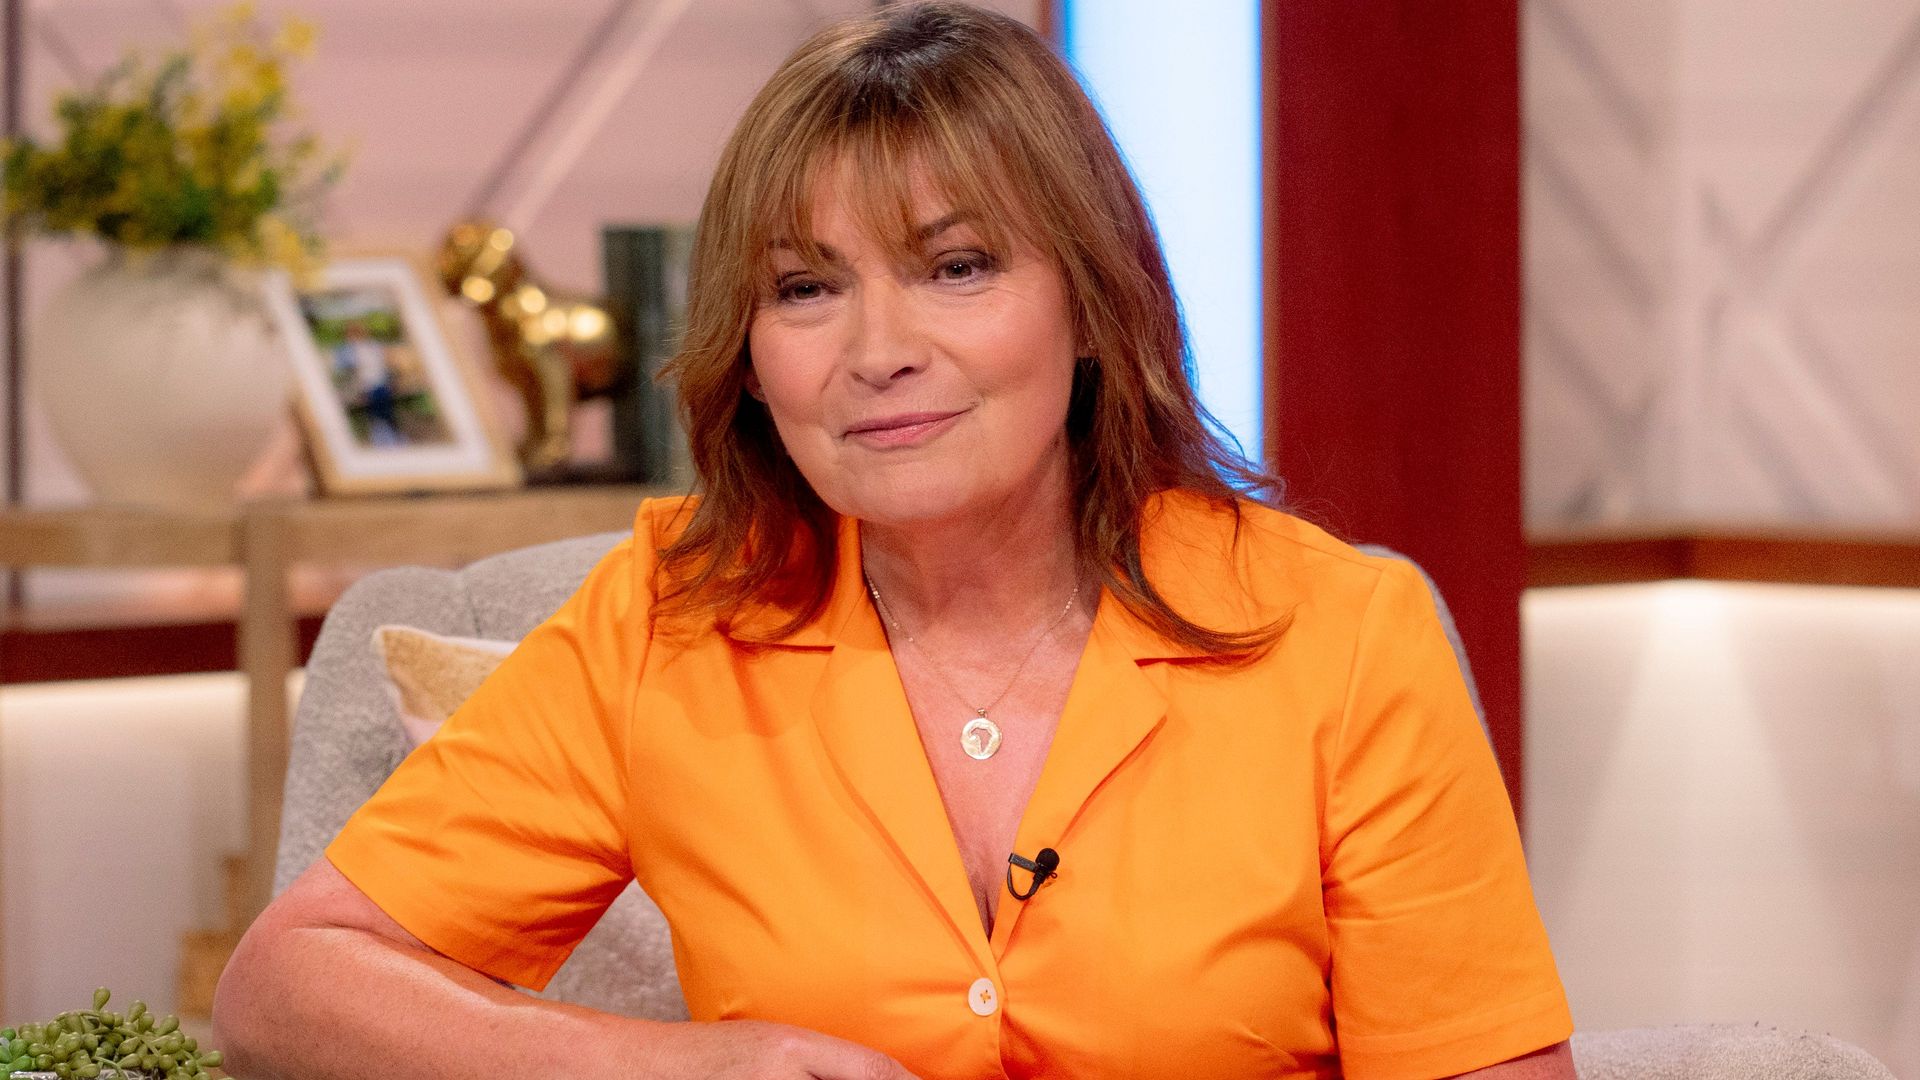 Lorraine Kelly sits on sofa wearing orange shirt